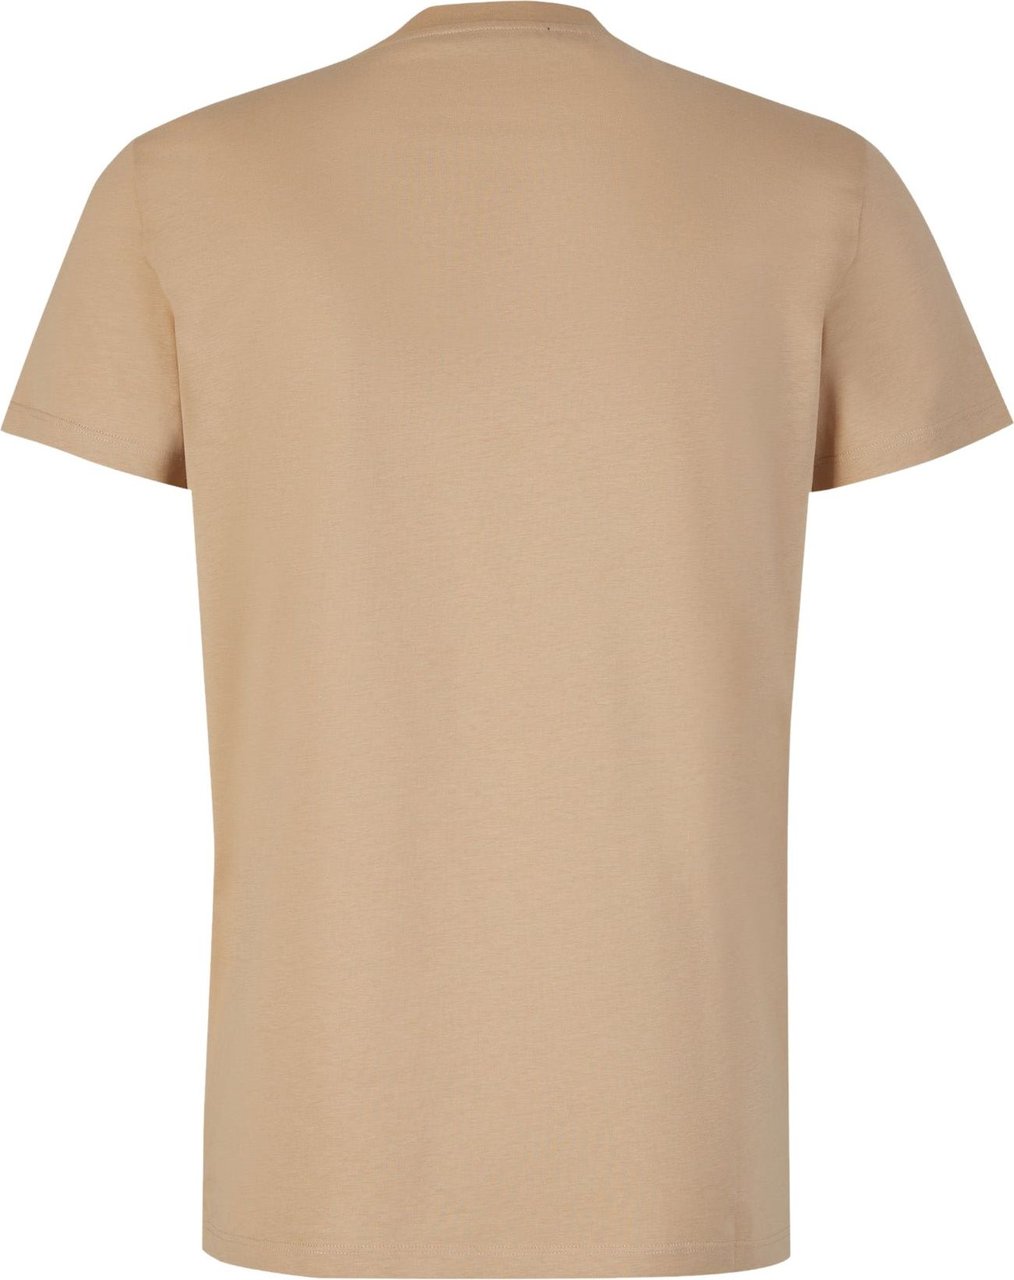 Balmain Logo Cotton T-Shirt Bruin